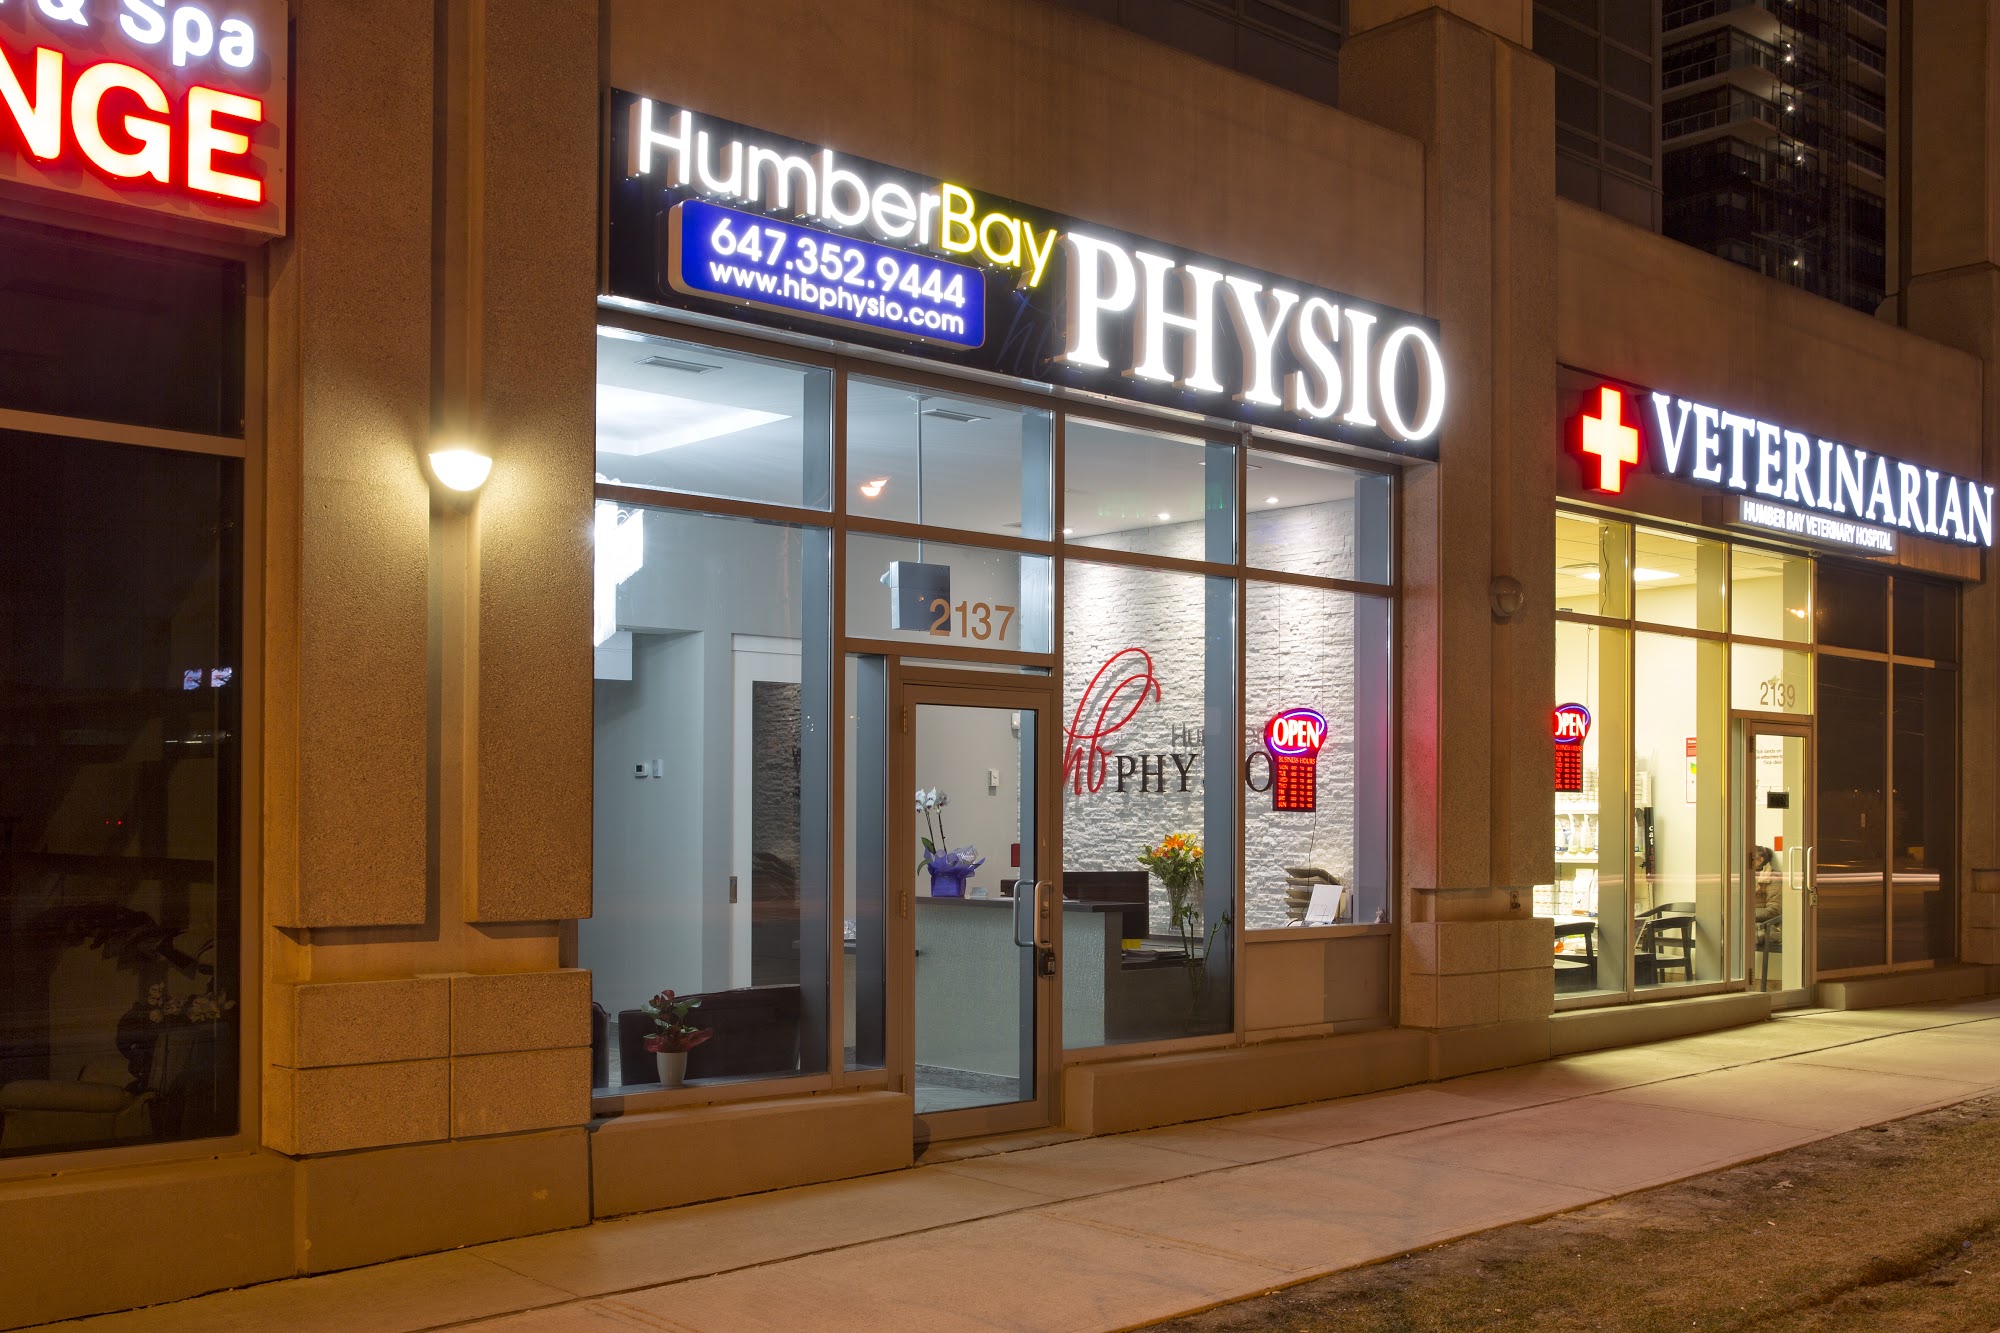 Humber Bay Physio Inc